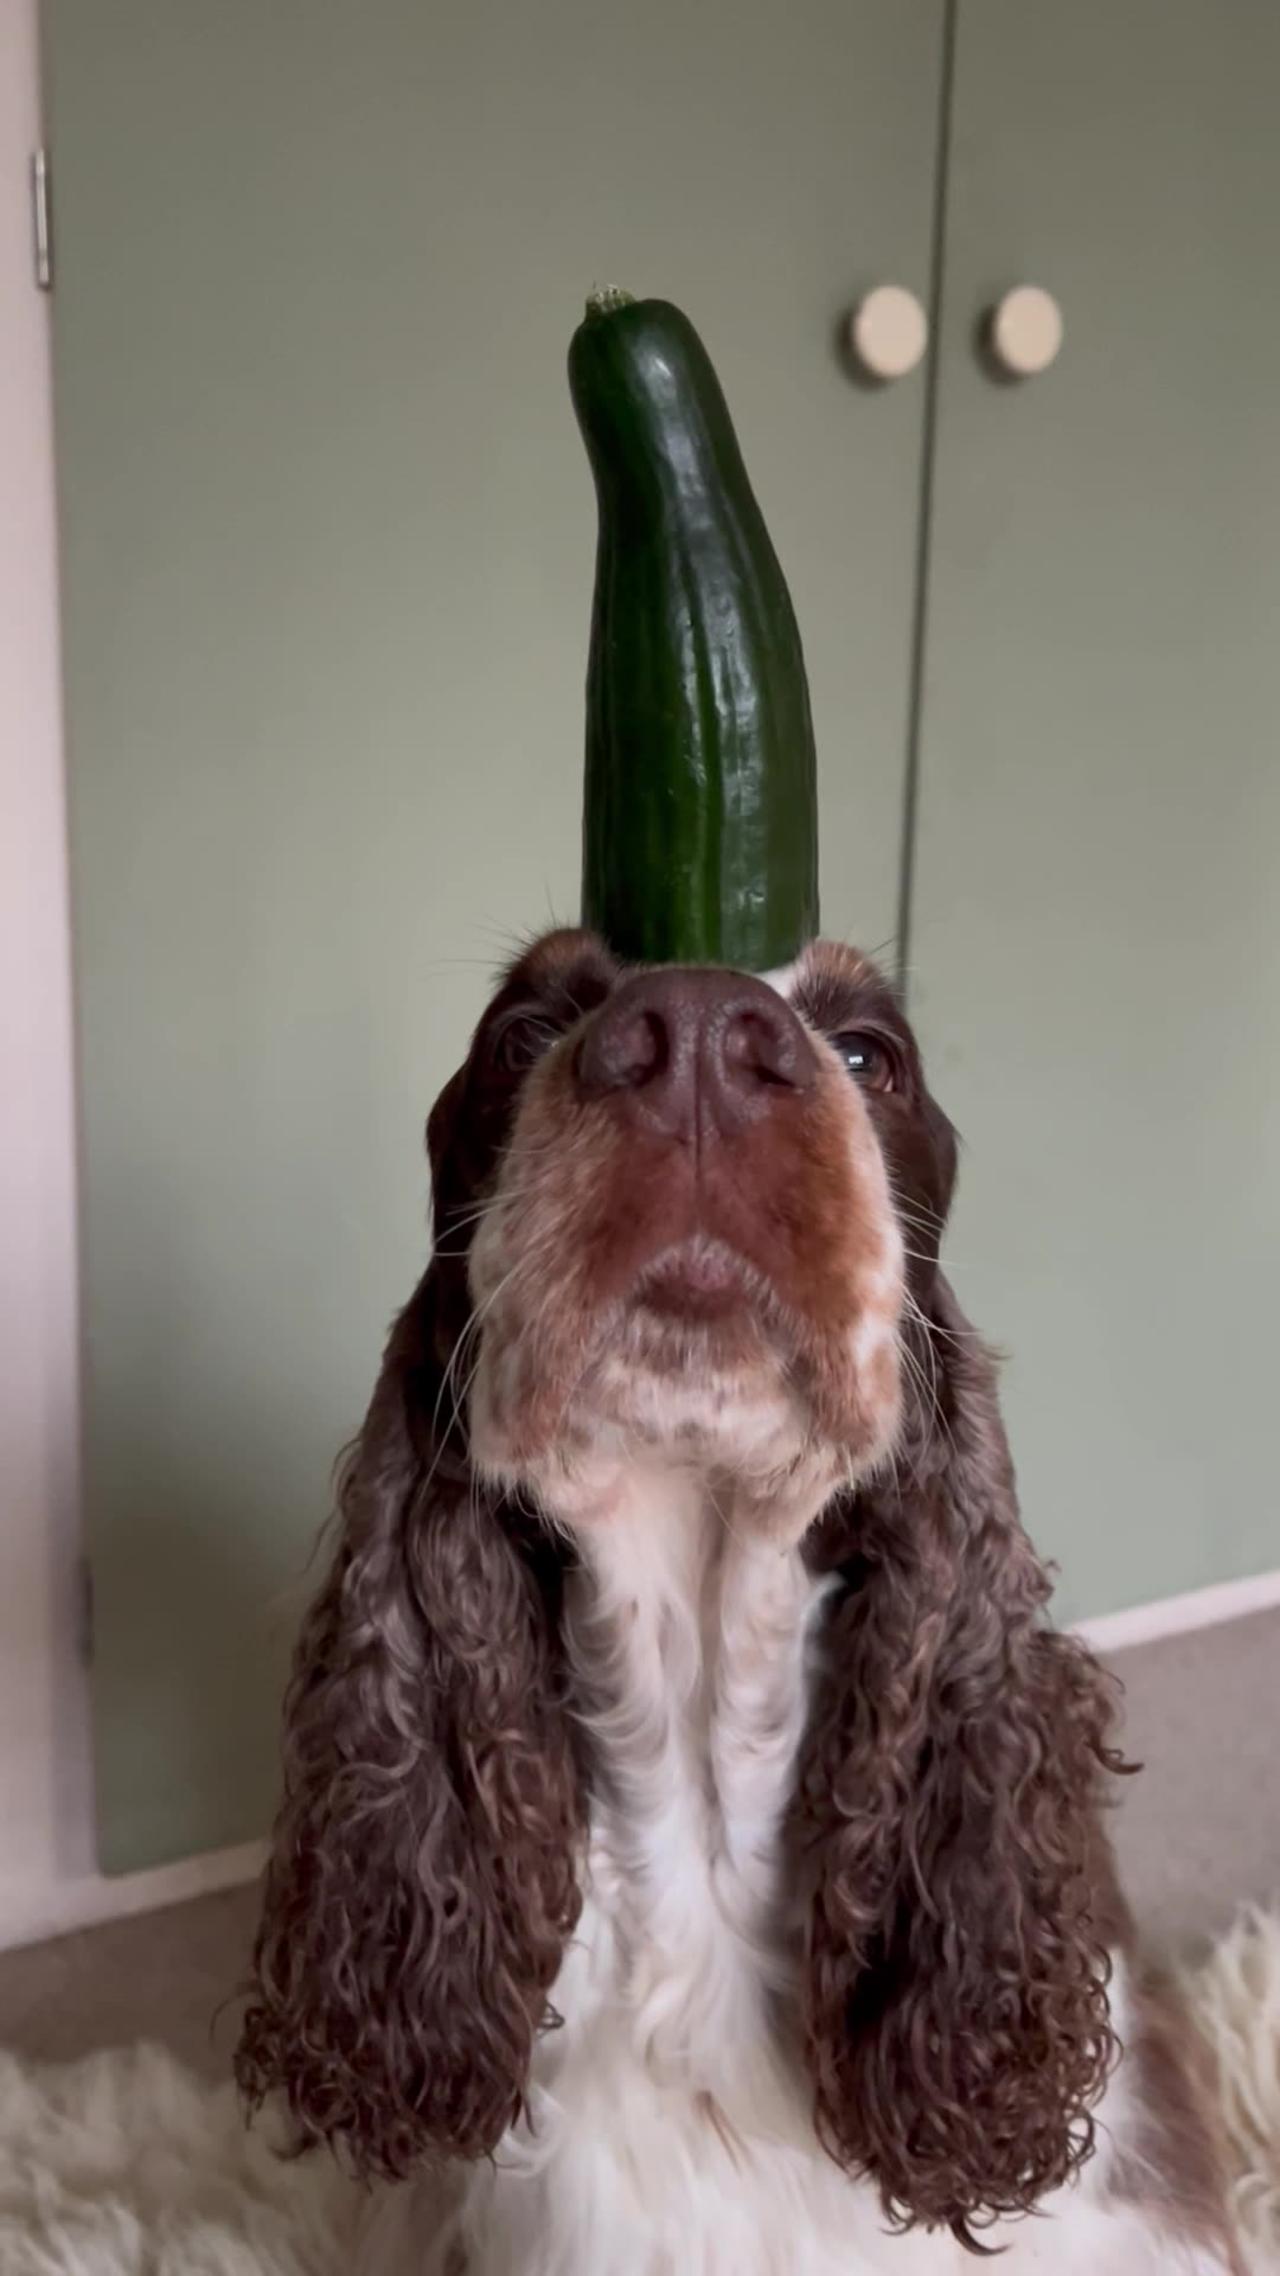 A Very Patient Cocker Spaniel Balances a Cucumber on Her Head